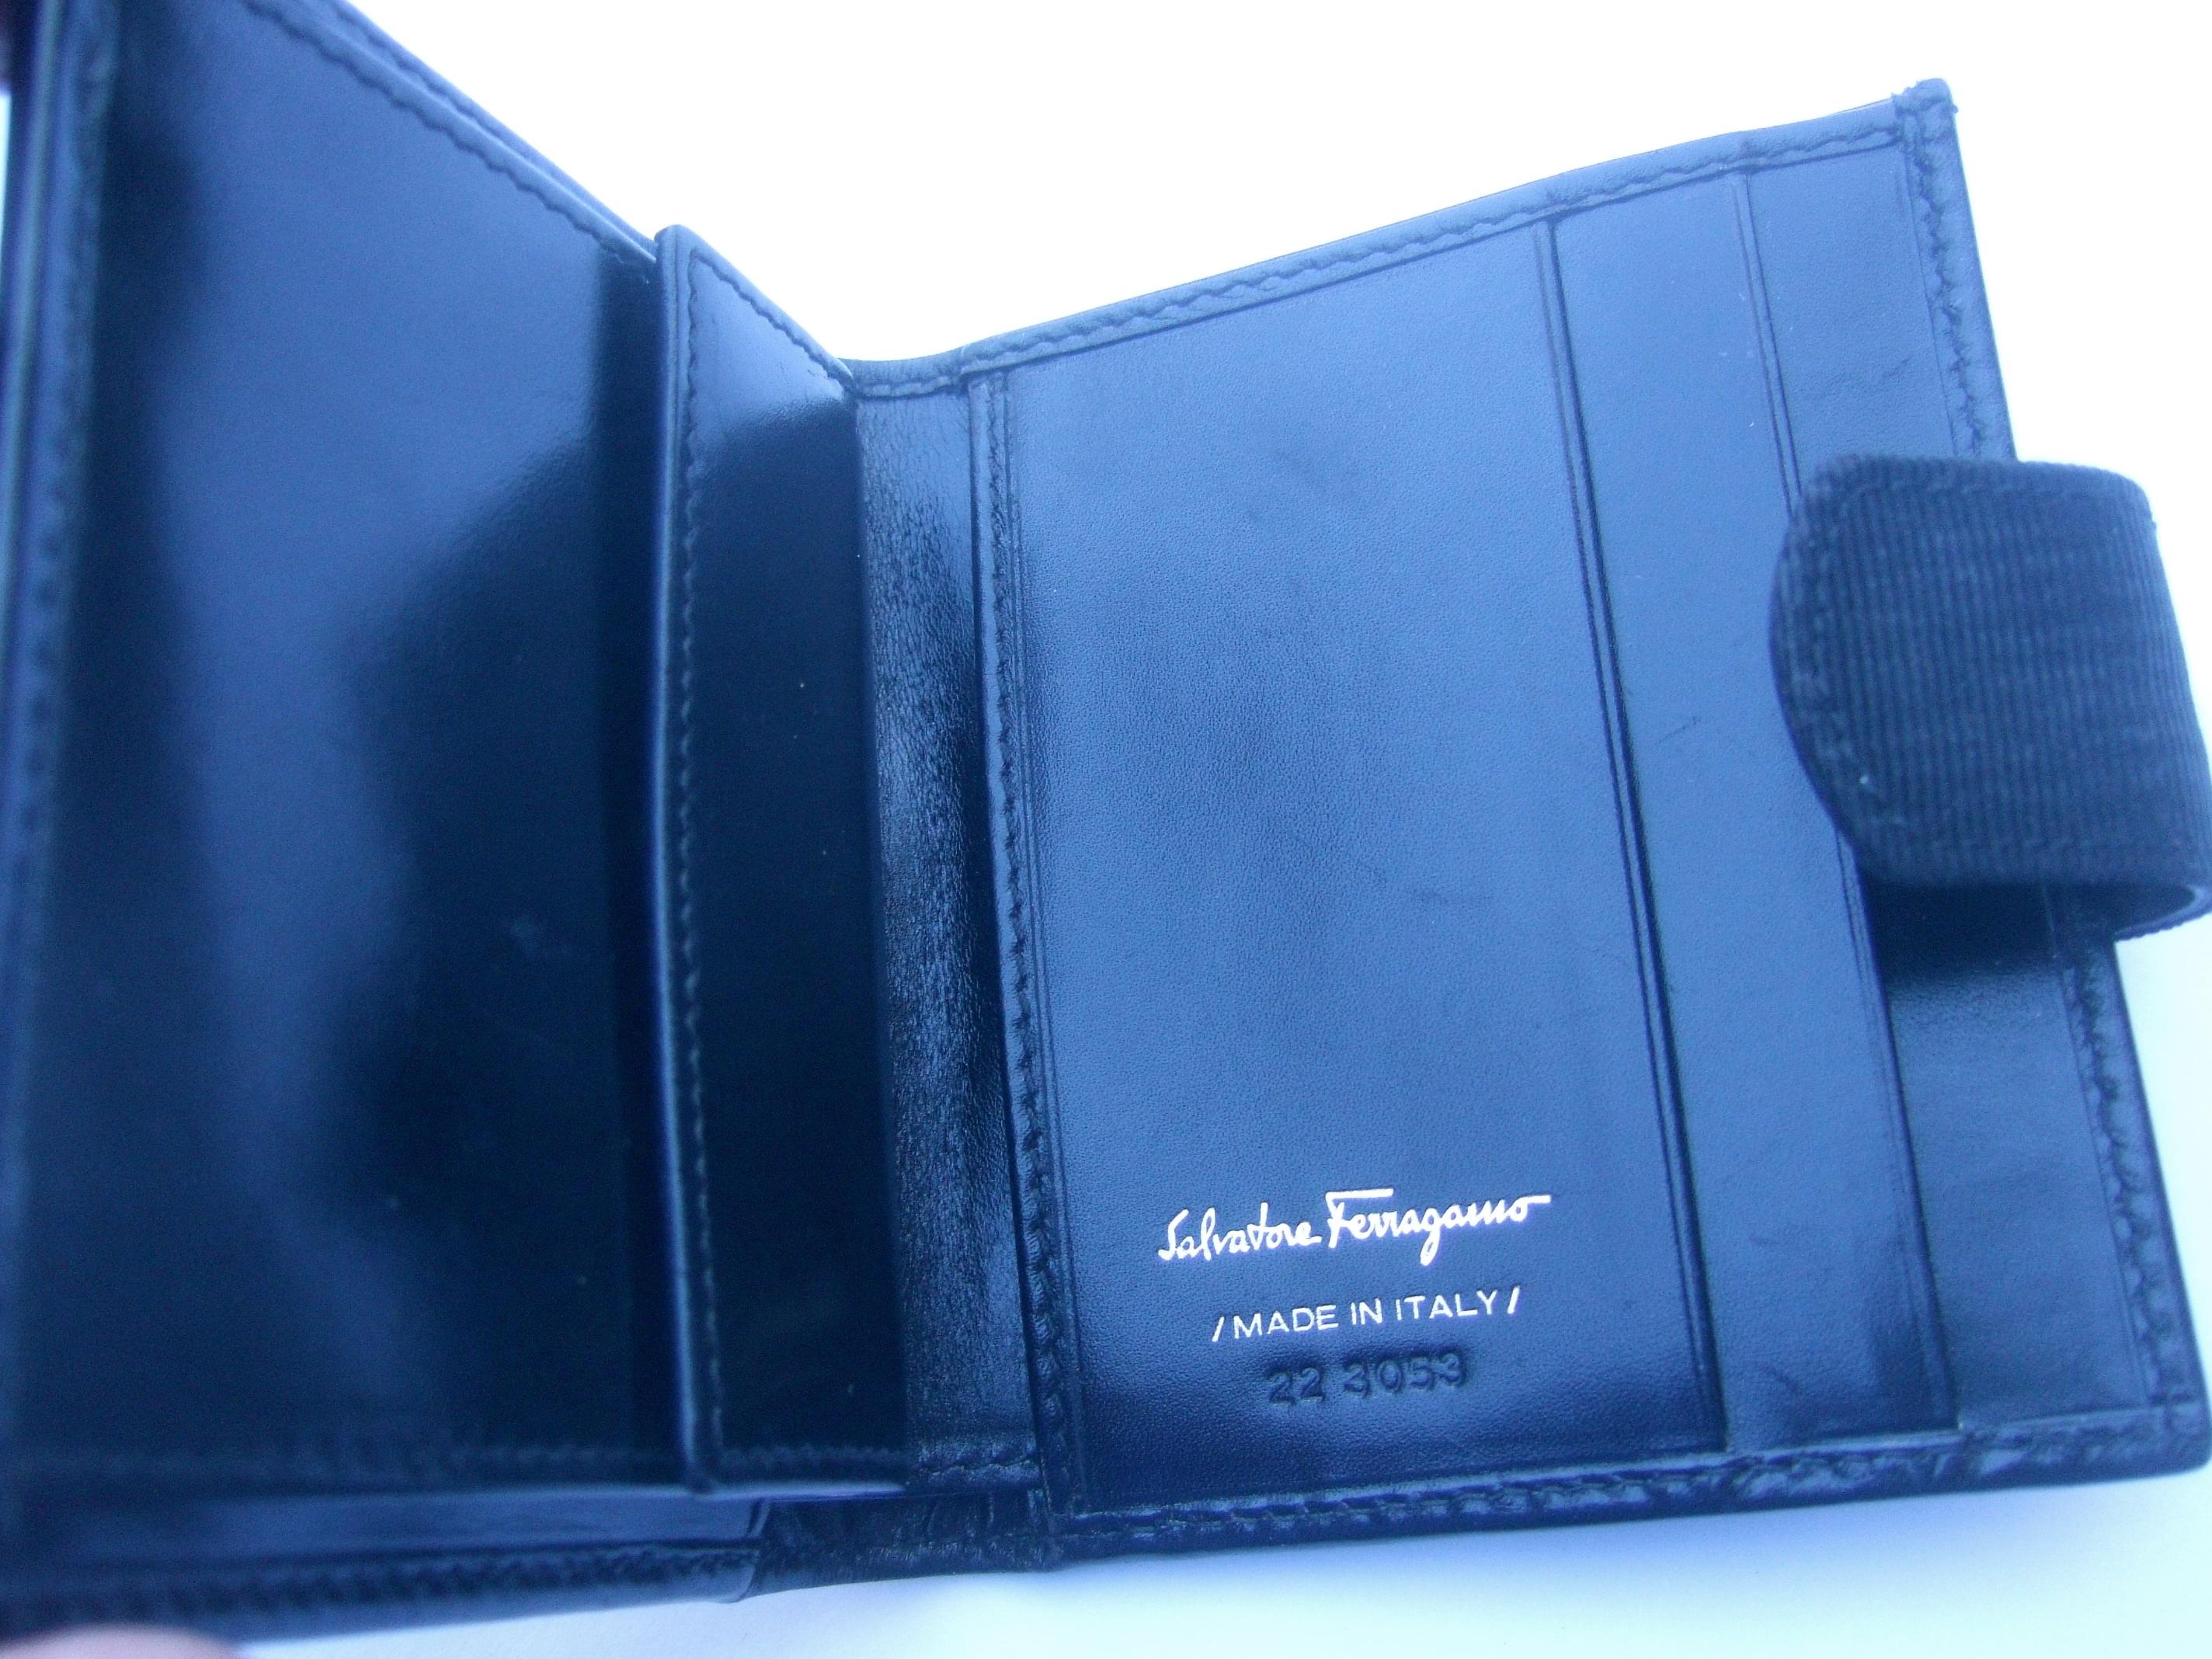 Salvatore Ferragamo Italy Black Leather Ribbon Trim Wallet in Box c 1990s 3